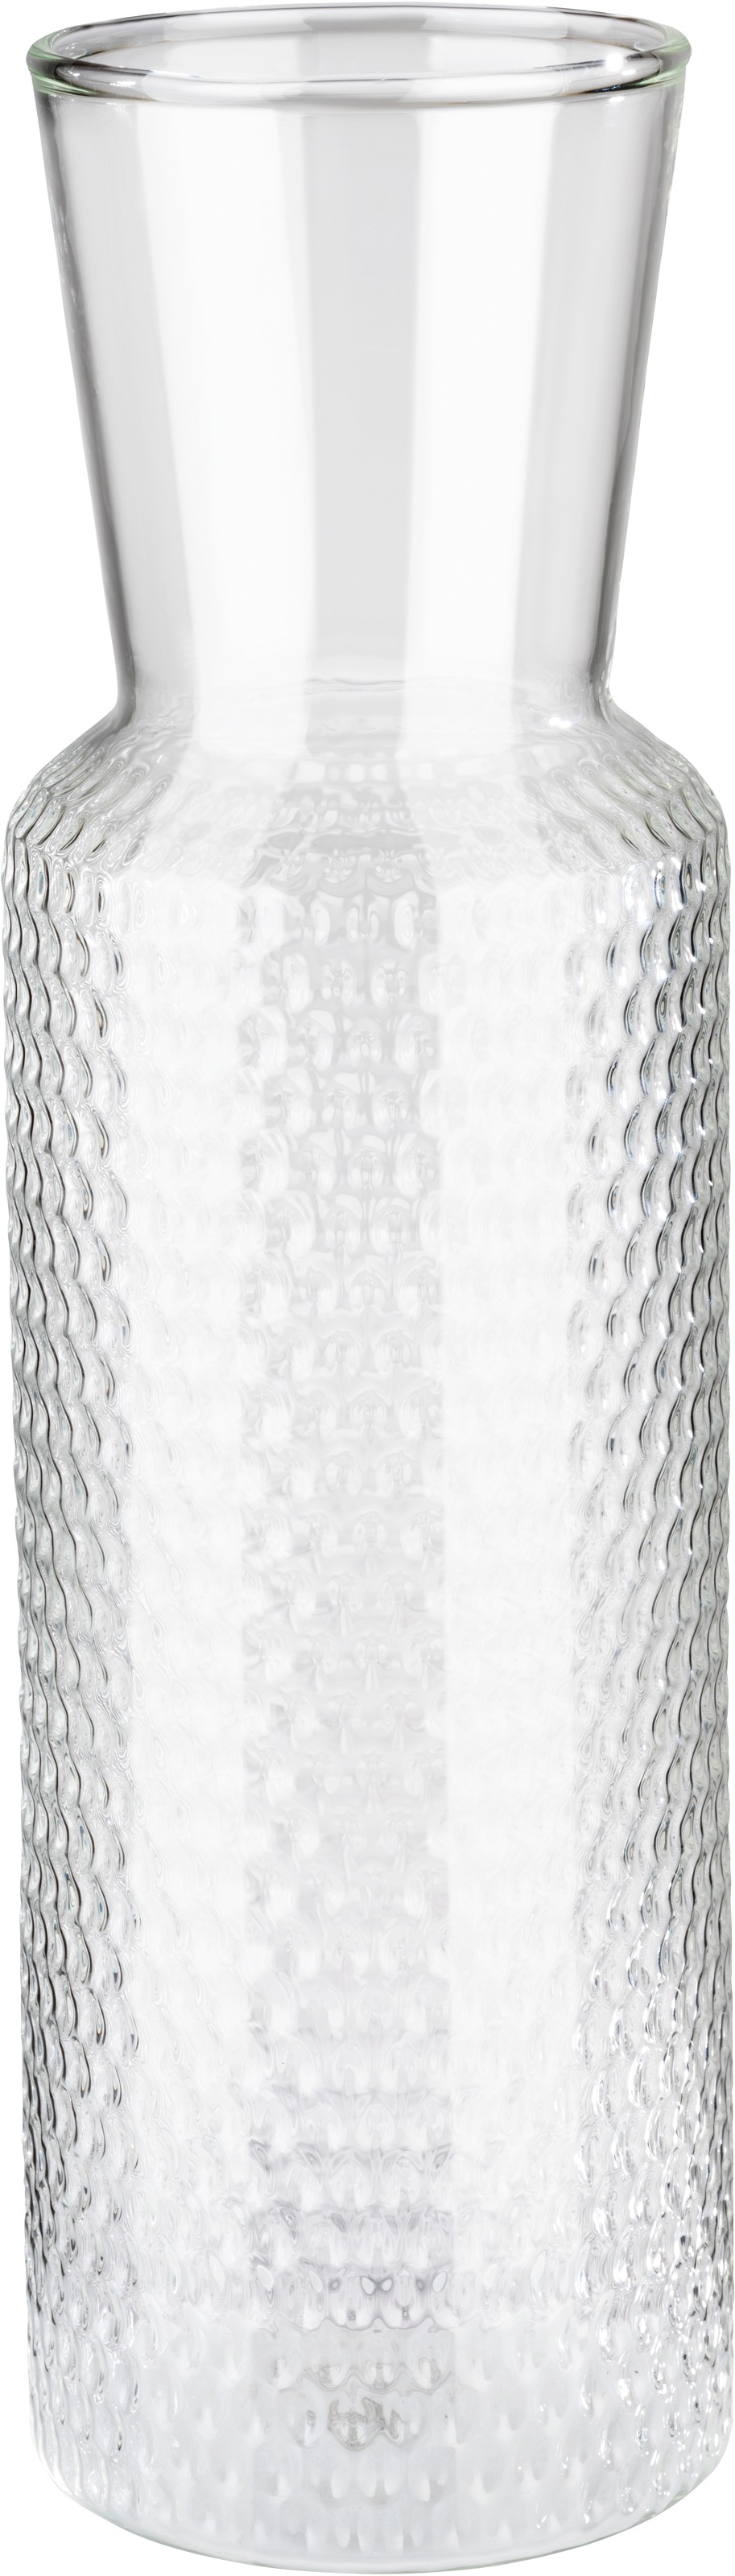 APS Karaffe »Dots«, Deckel aus Kork, 900 ml